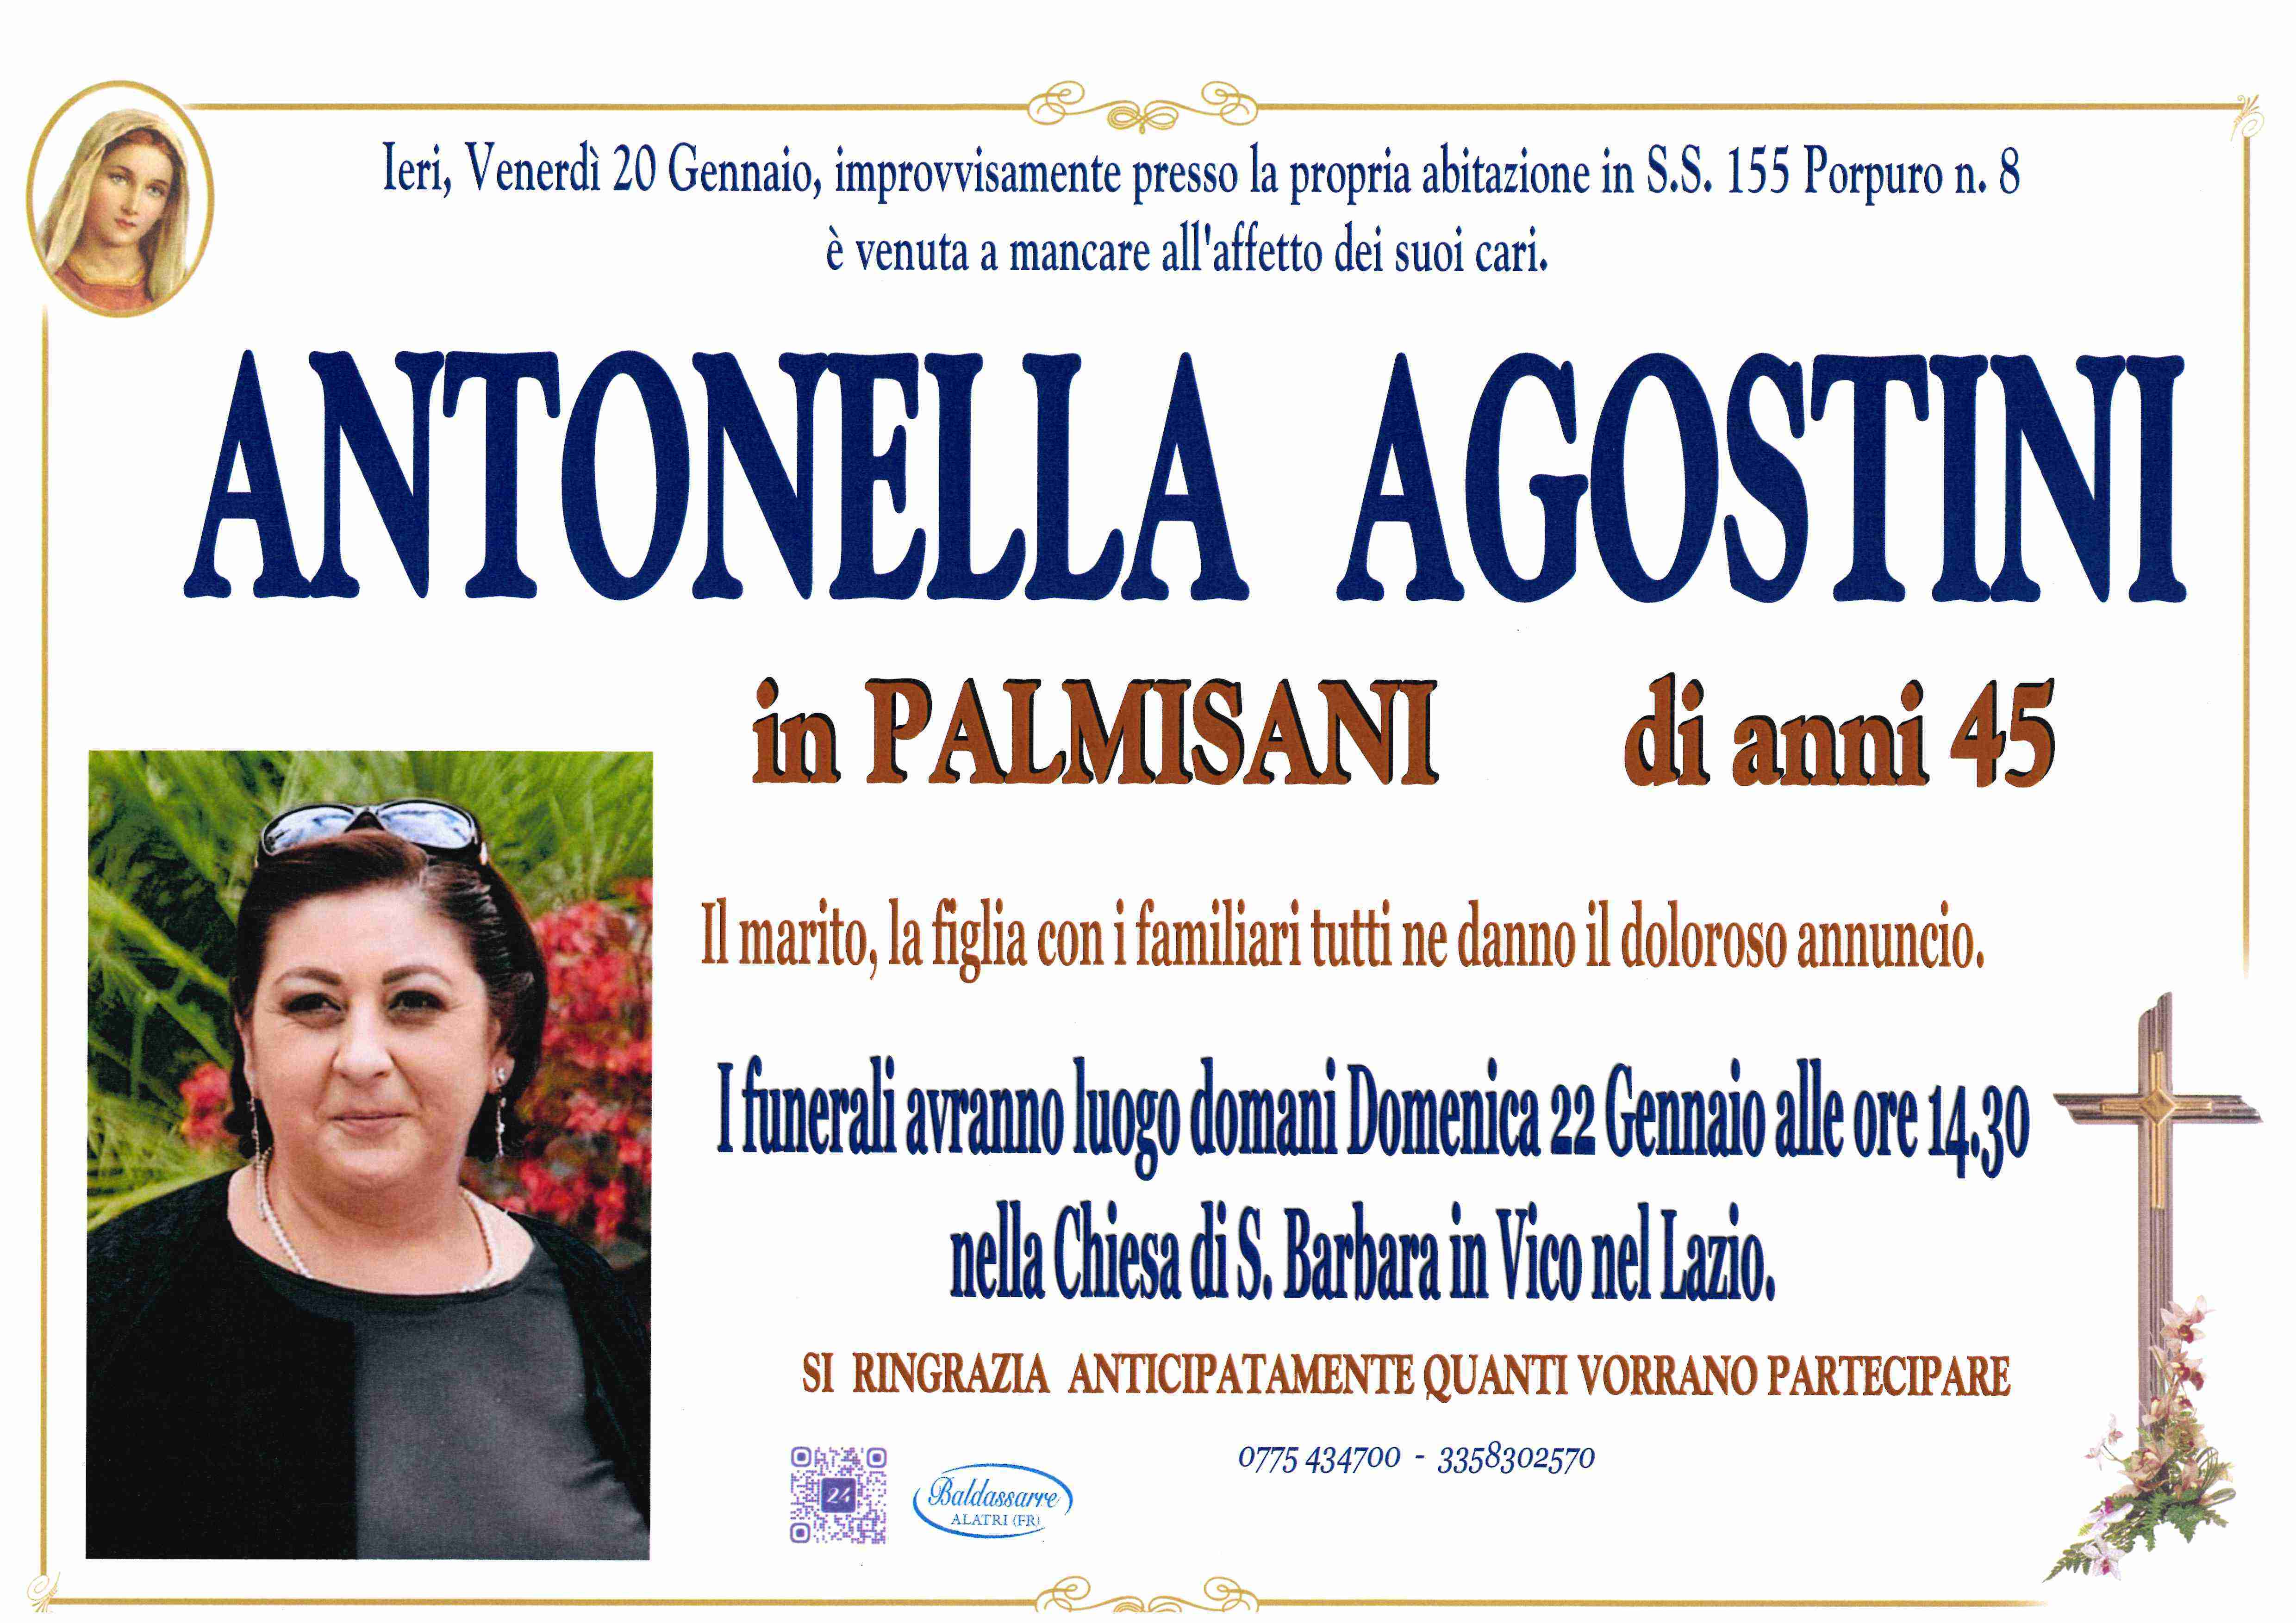 Antonella Agostini